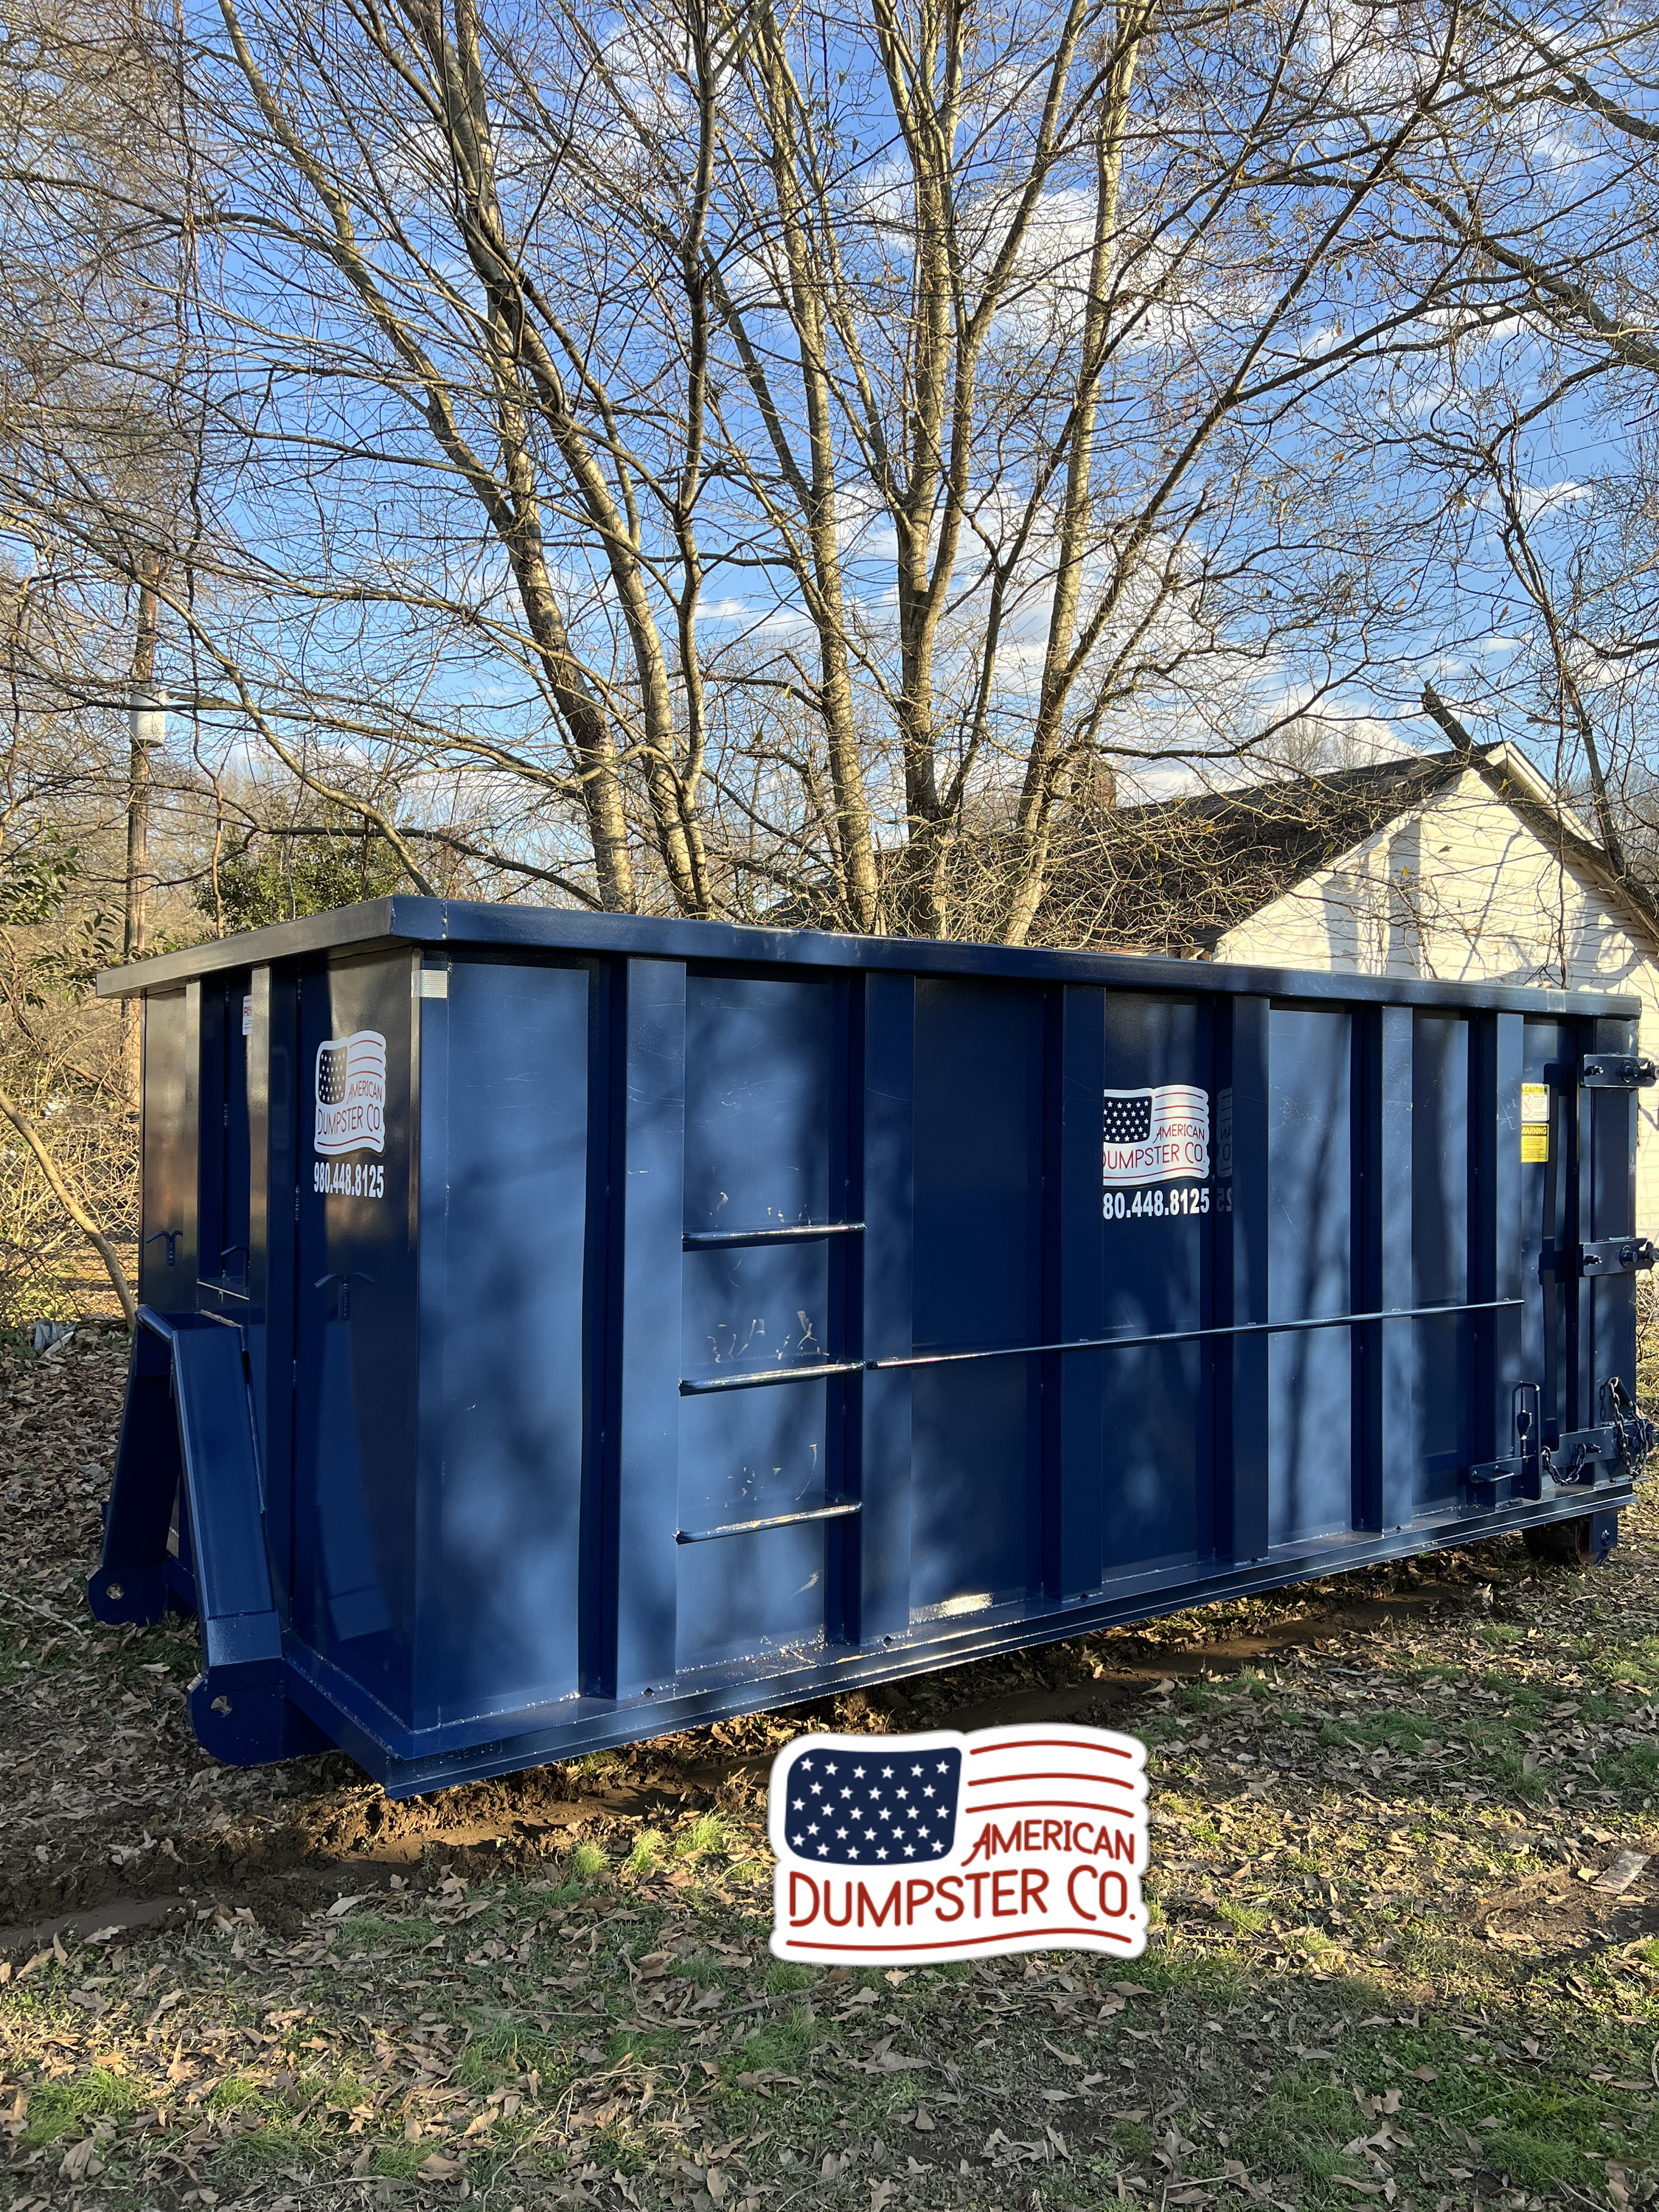 Dumpster Rental Lincolnton NC